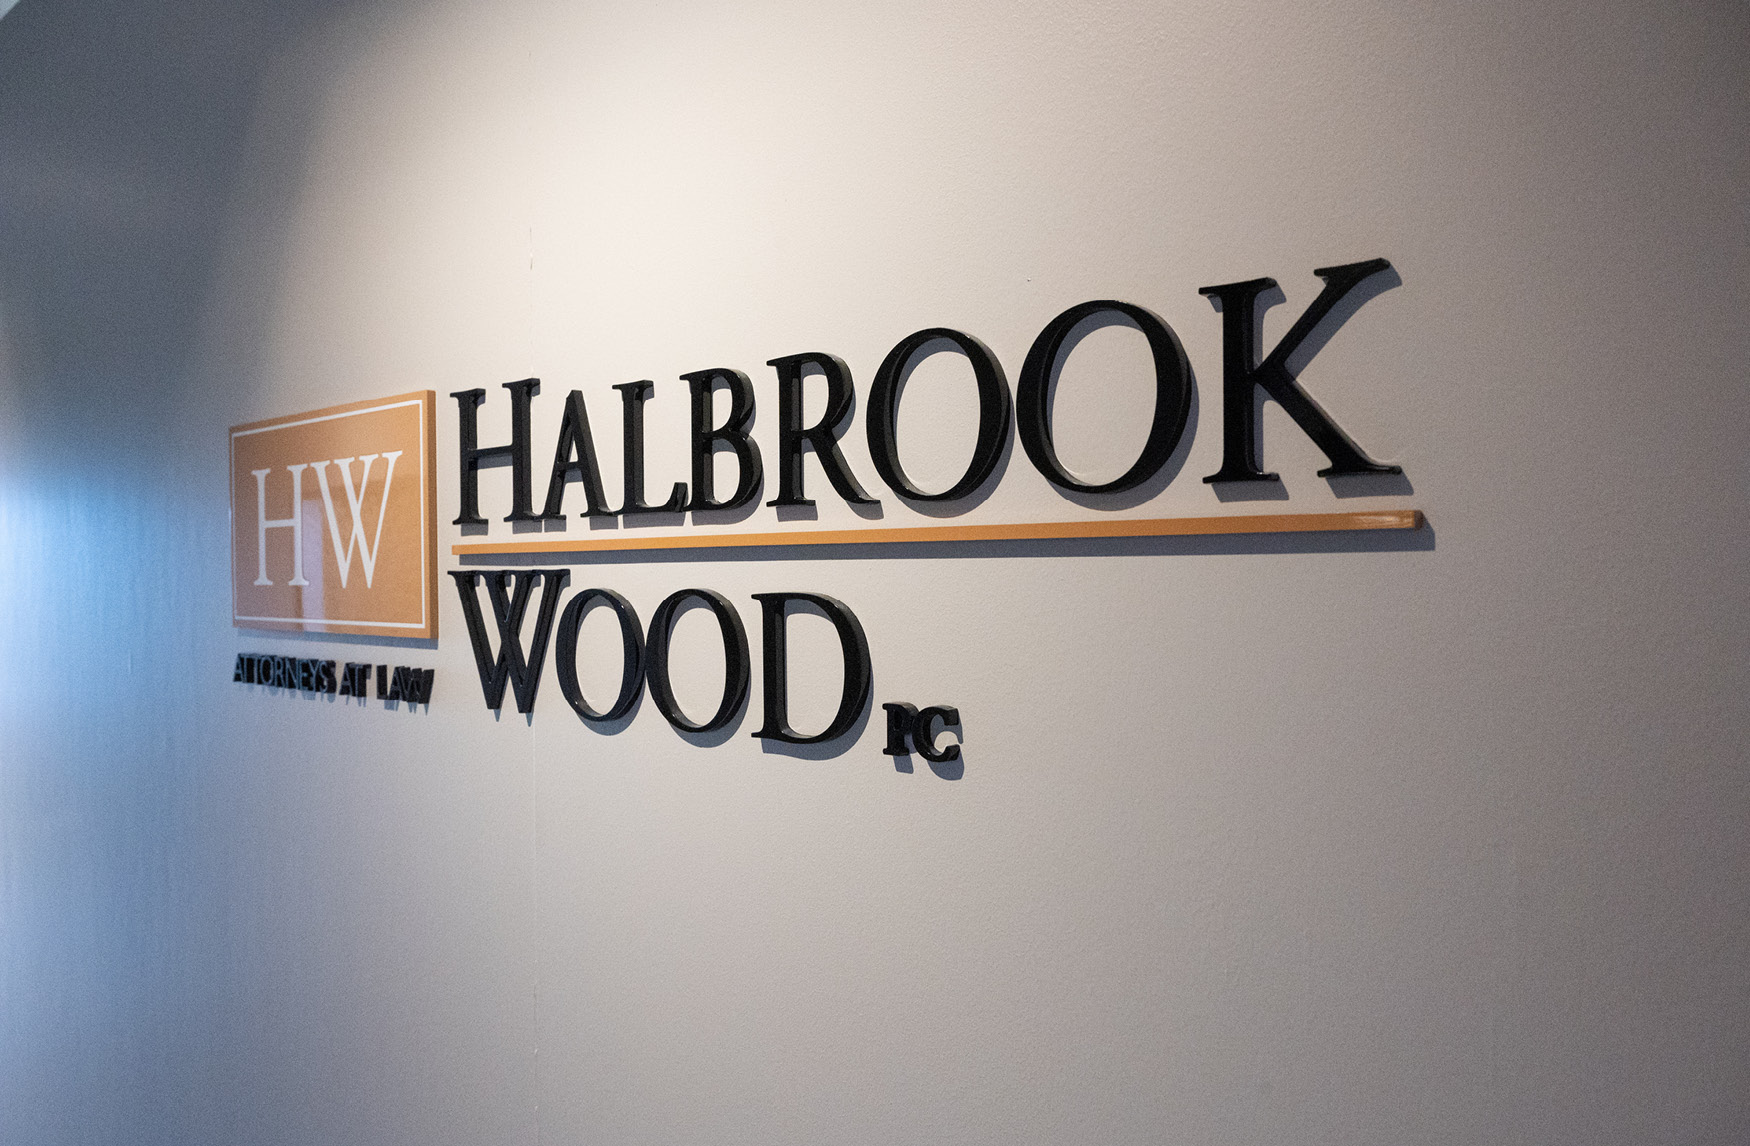 Halbrook Wood logo on office wall